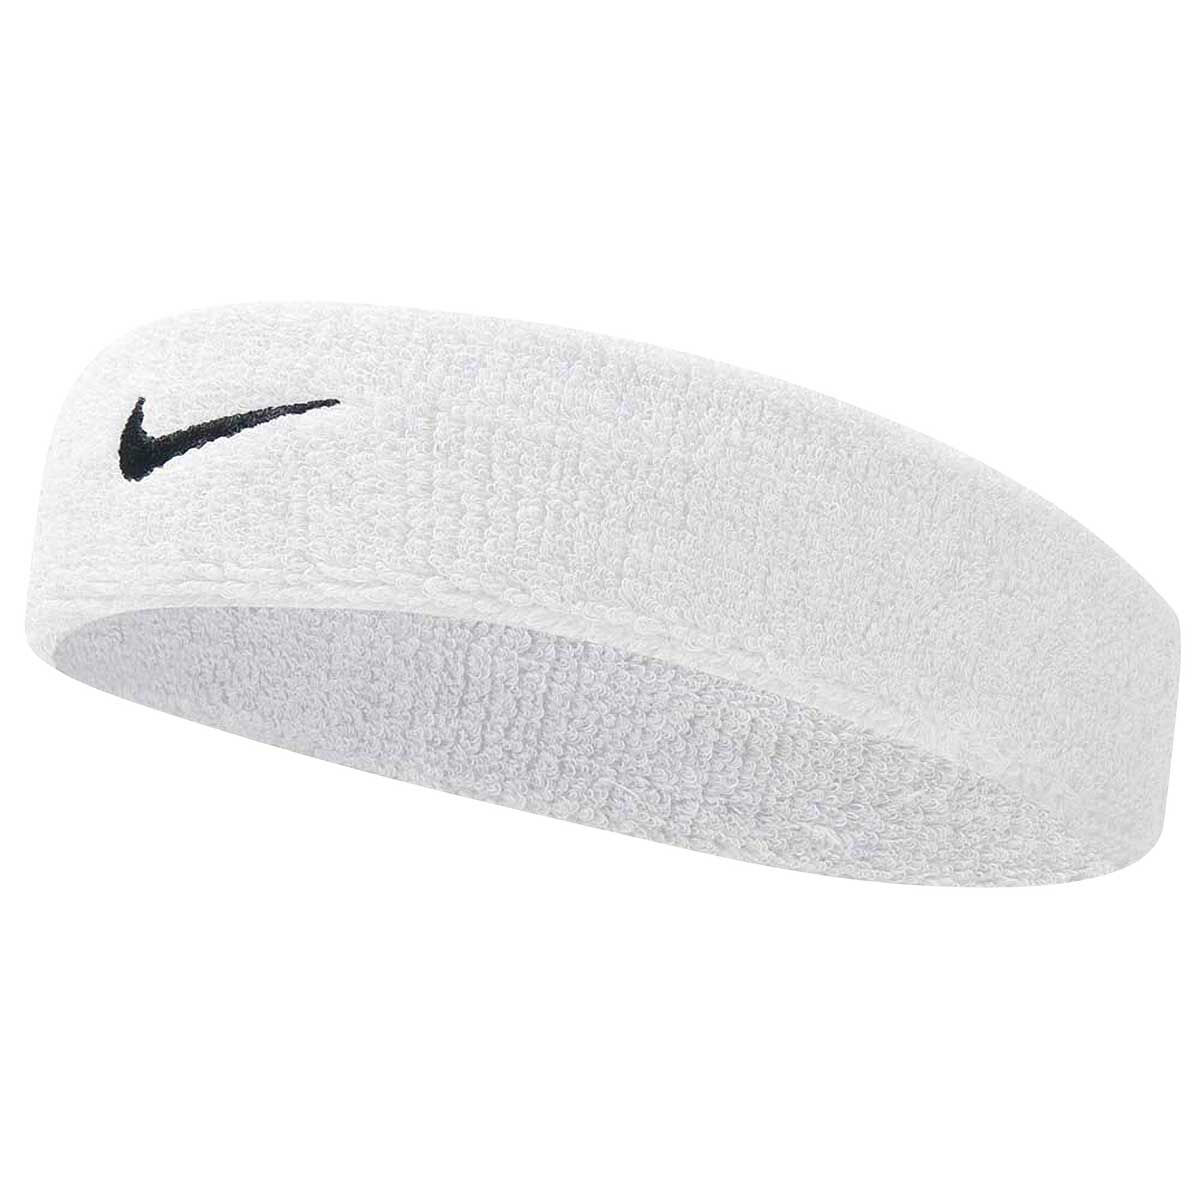 white and black nike headband